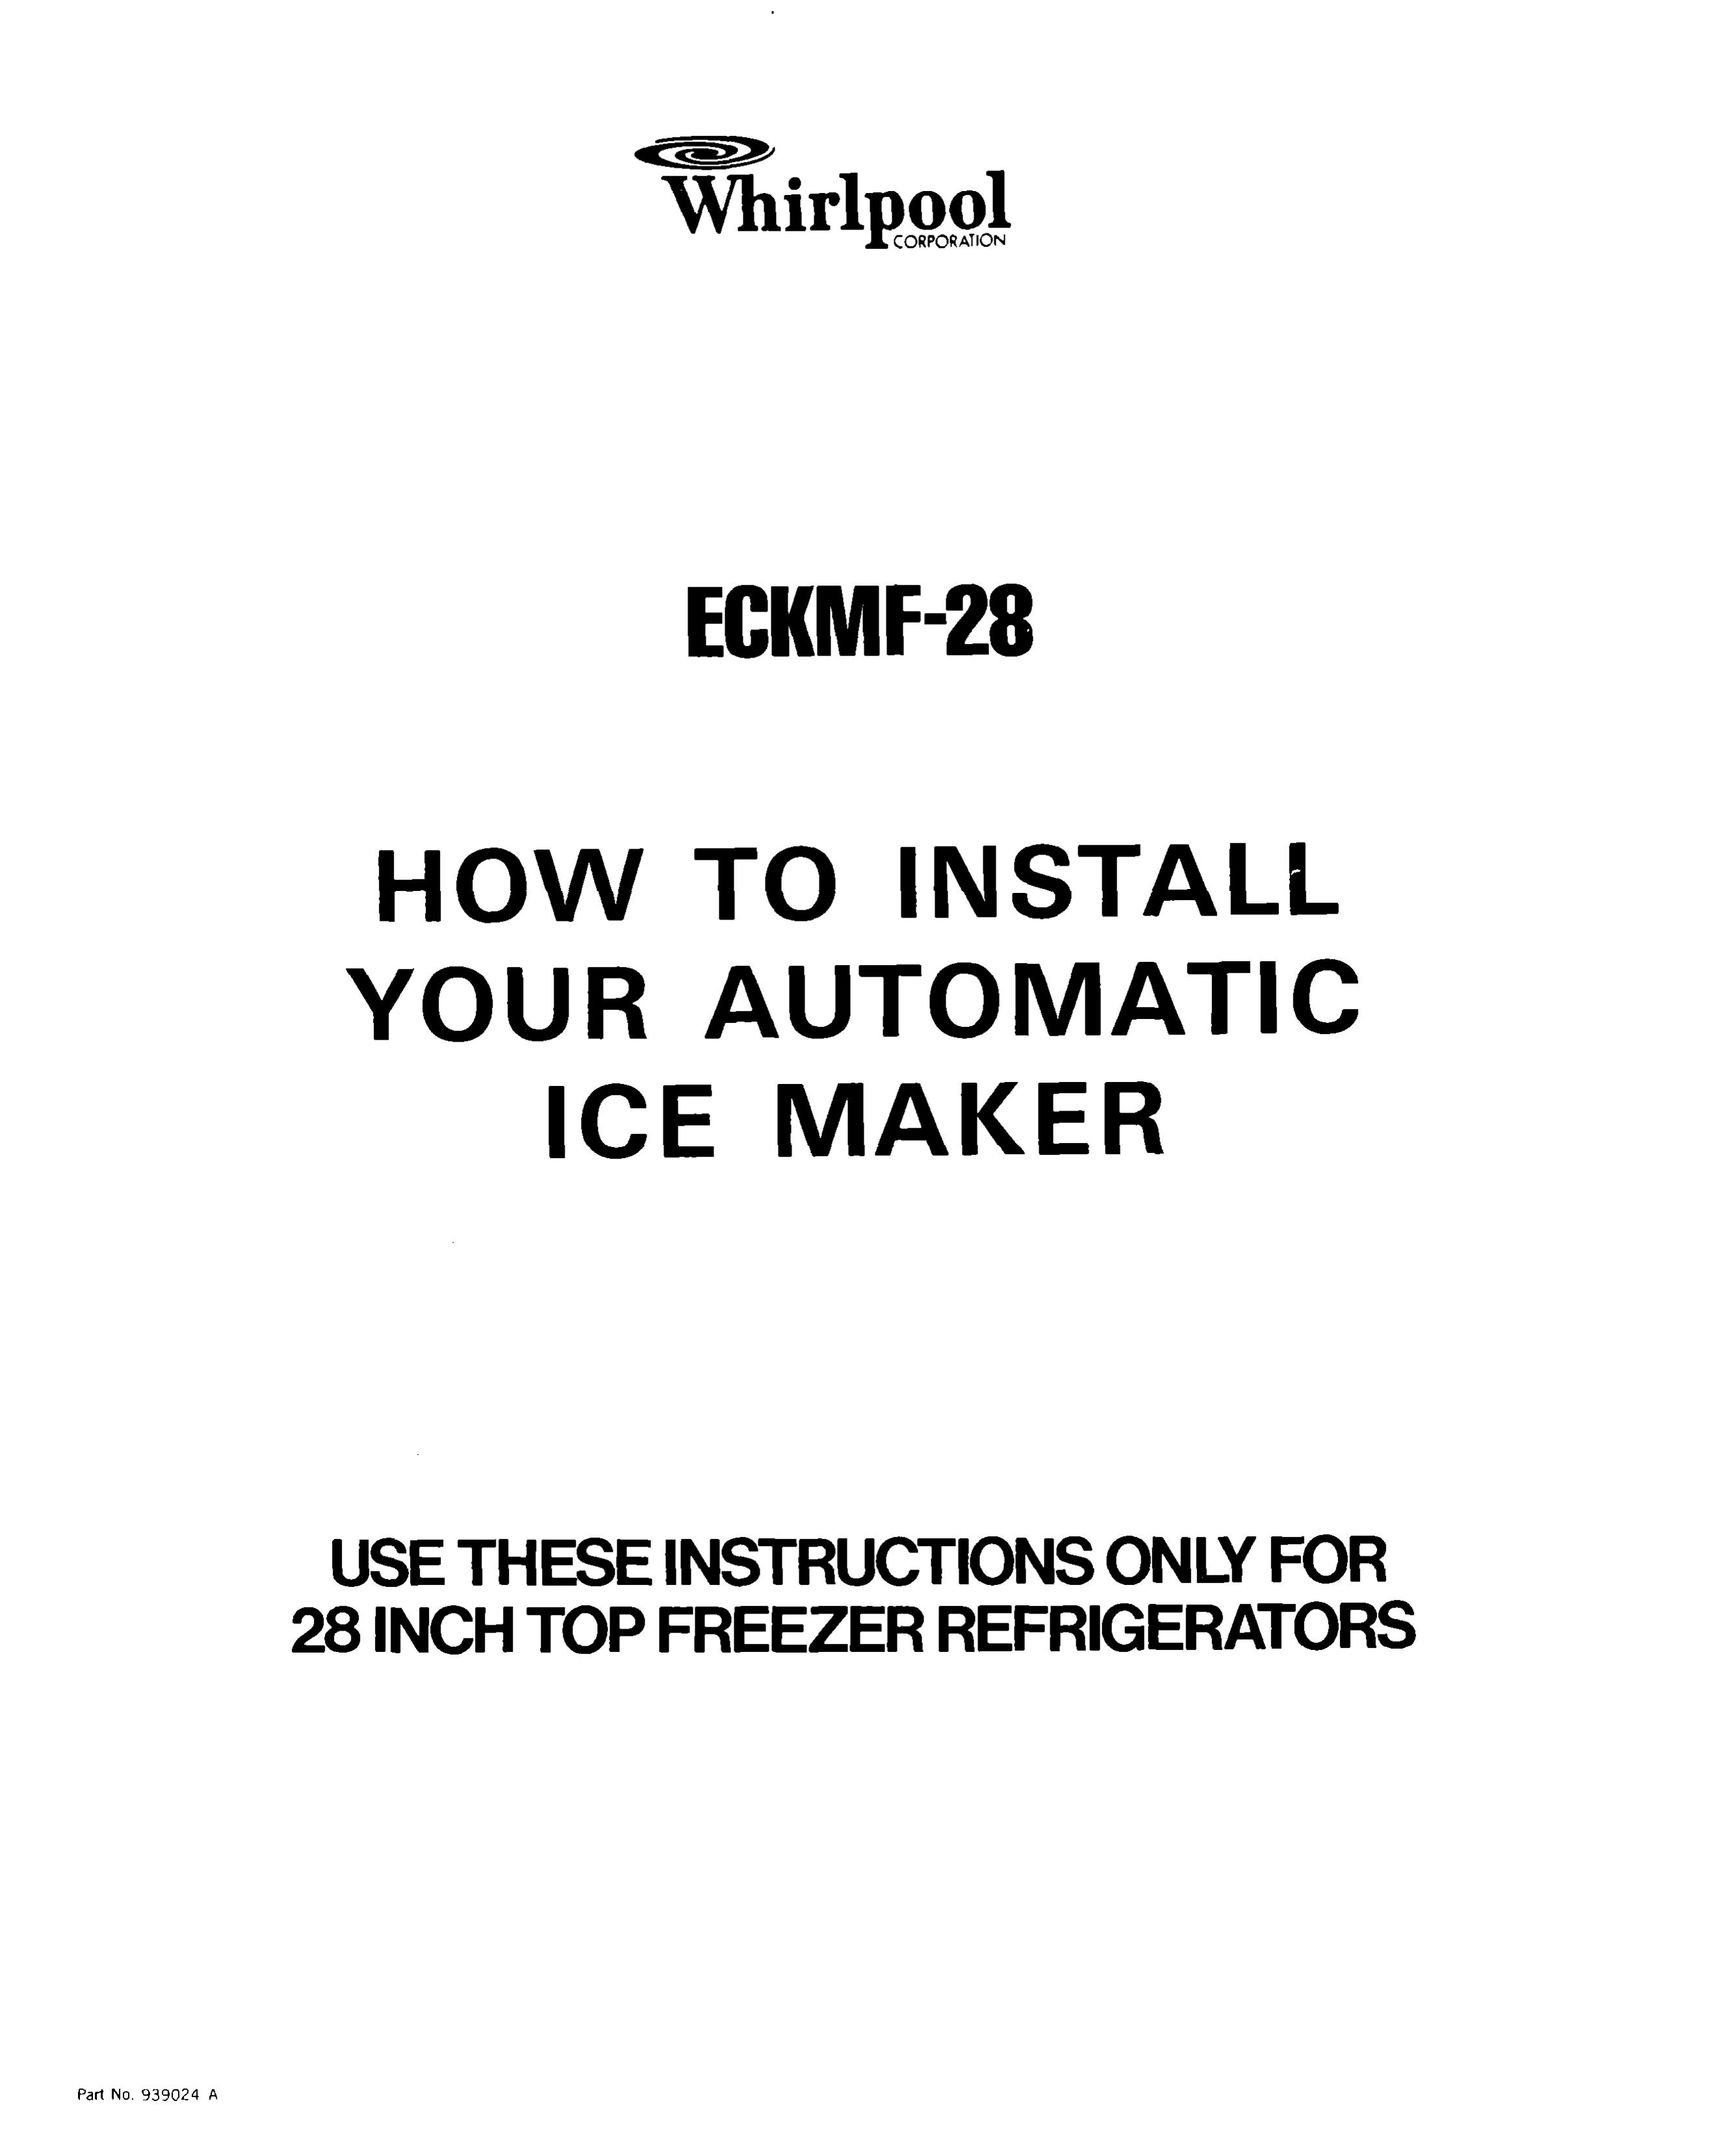 Whirlpool ECKMF-28 Ice Maker User Manual